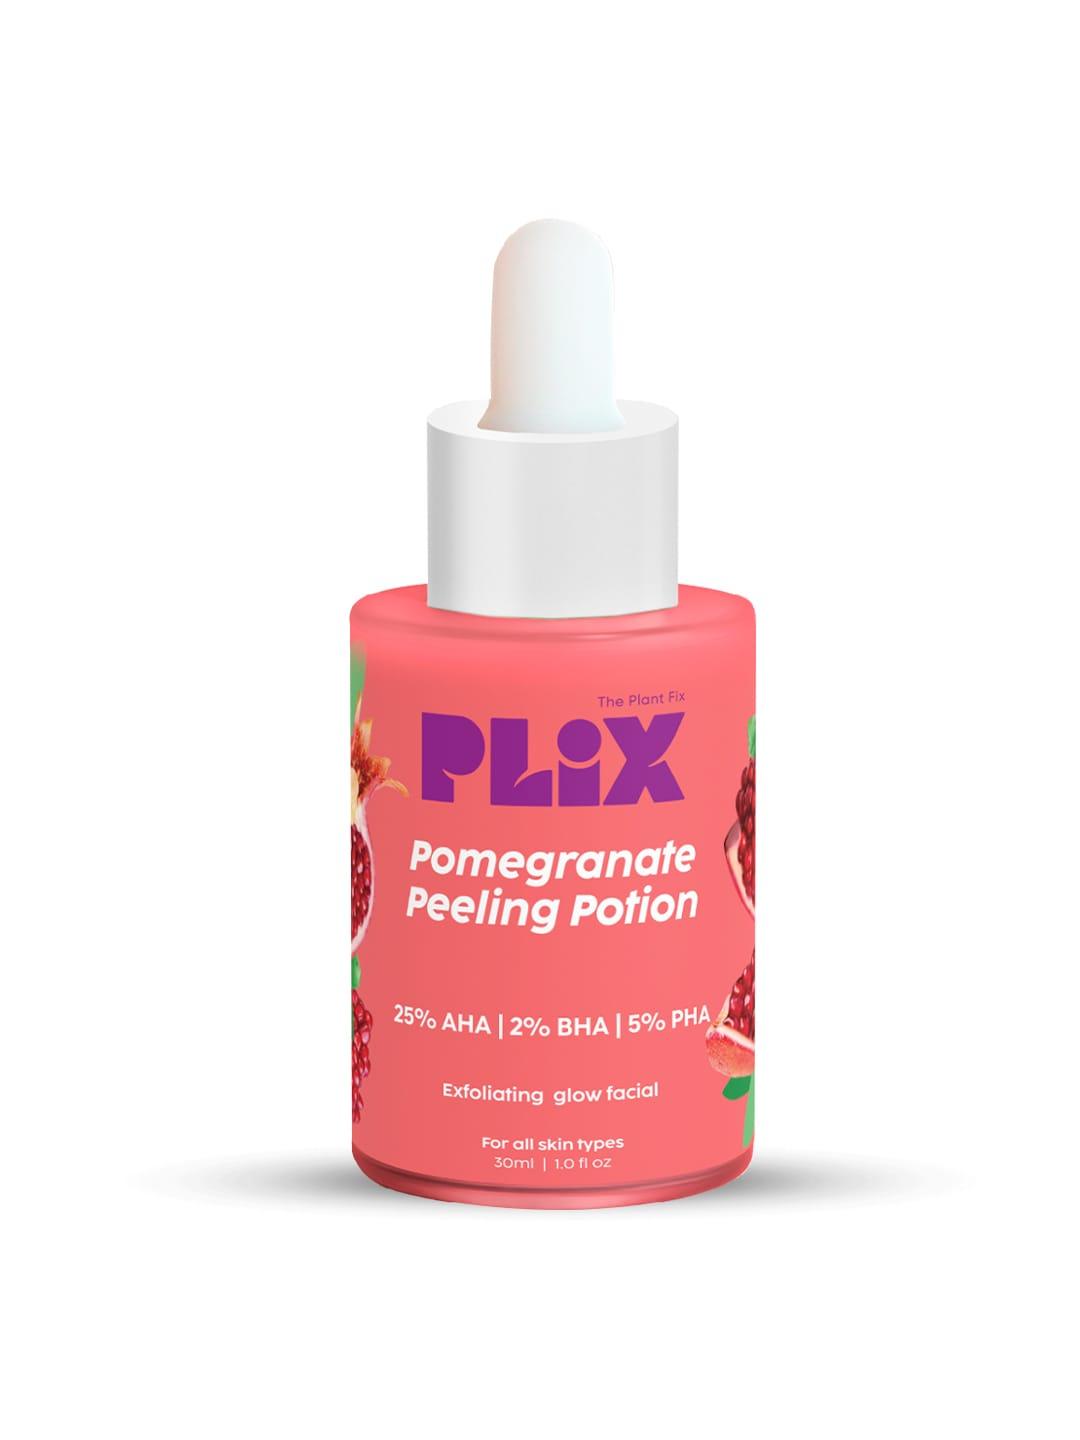 plix the plant fix pomegranate peeling potion with 25% aha + 2% bha + 5% pha - 30ml